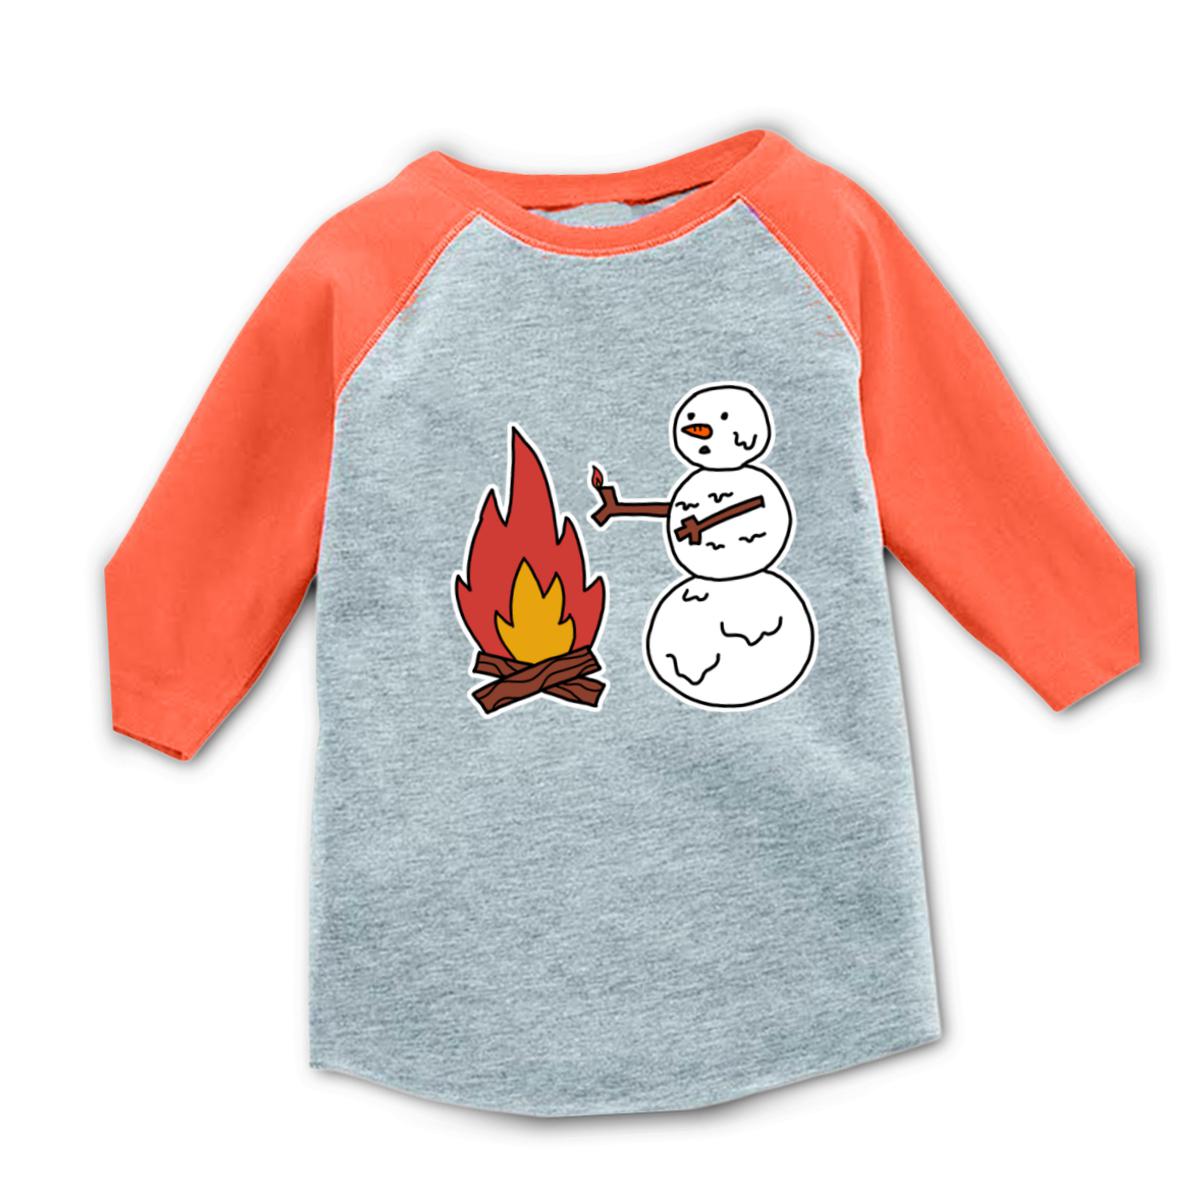 Snowman Keeping Warm Toddler Raglan Tee 2T heather-orange